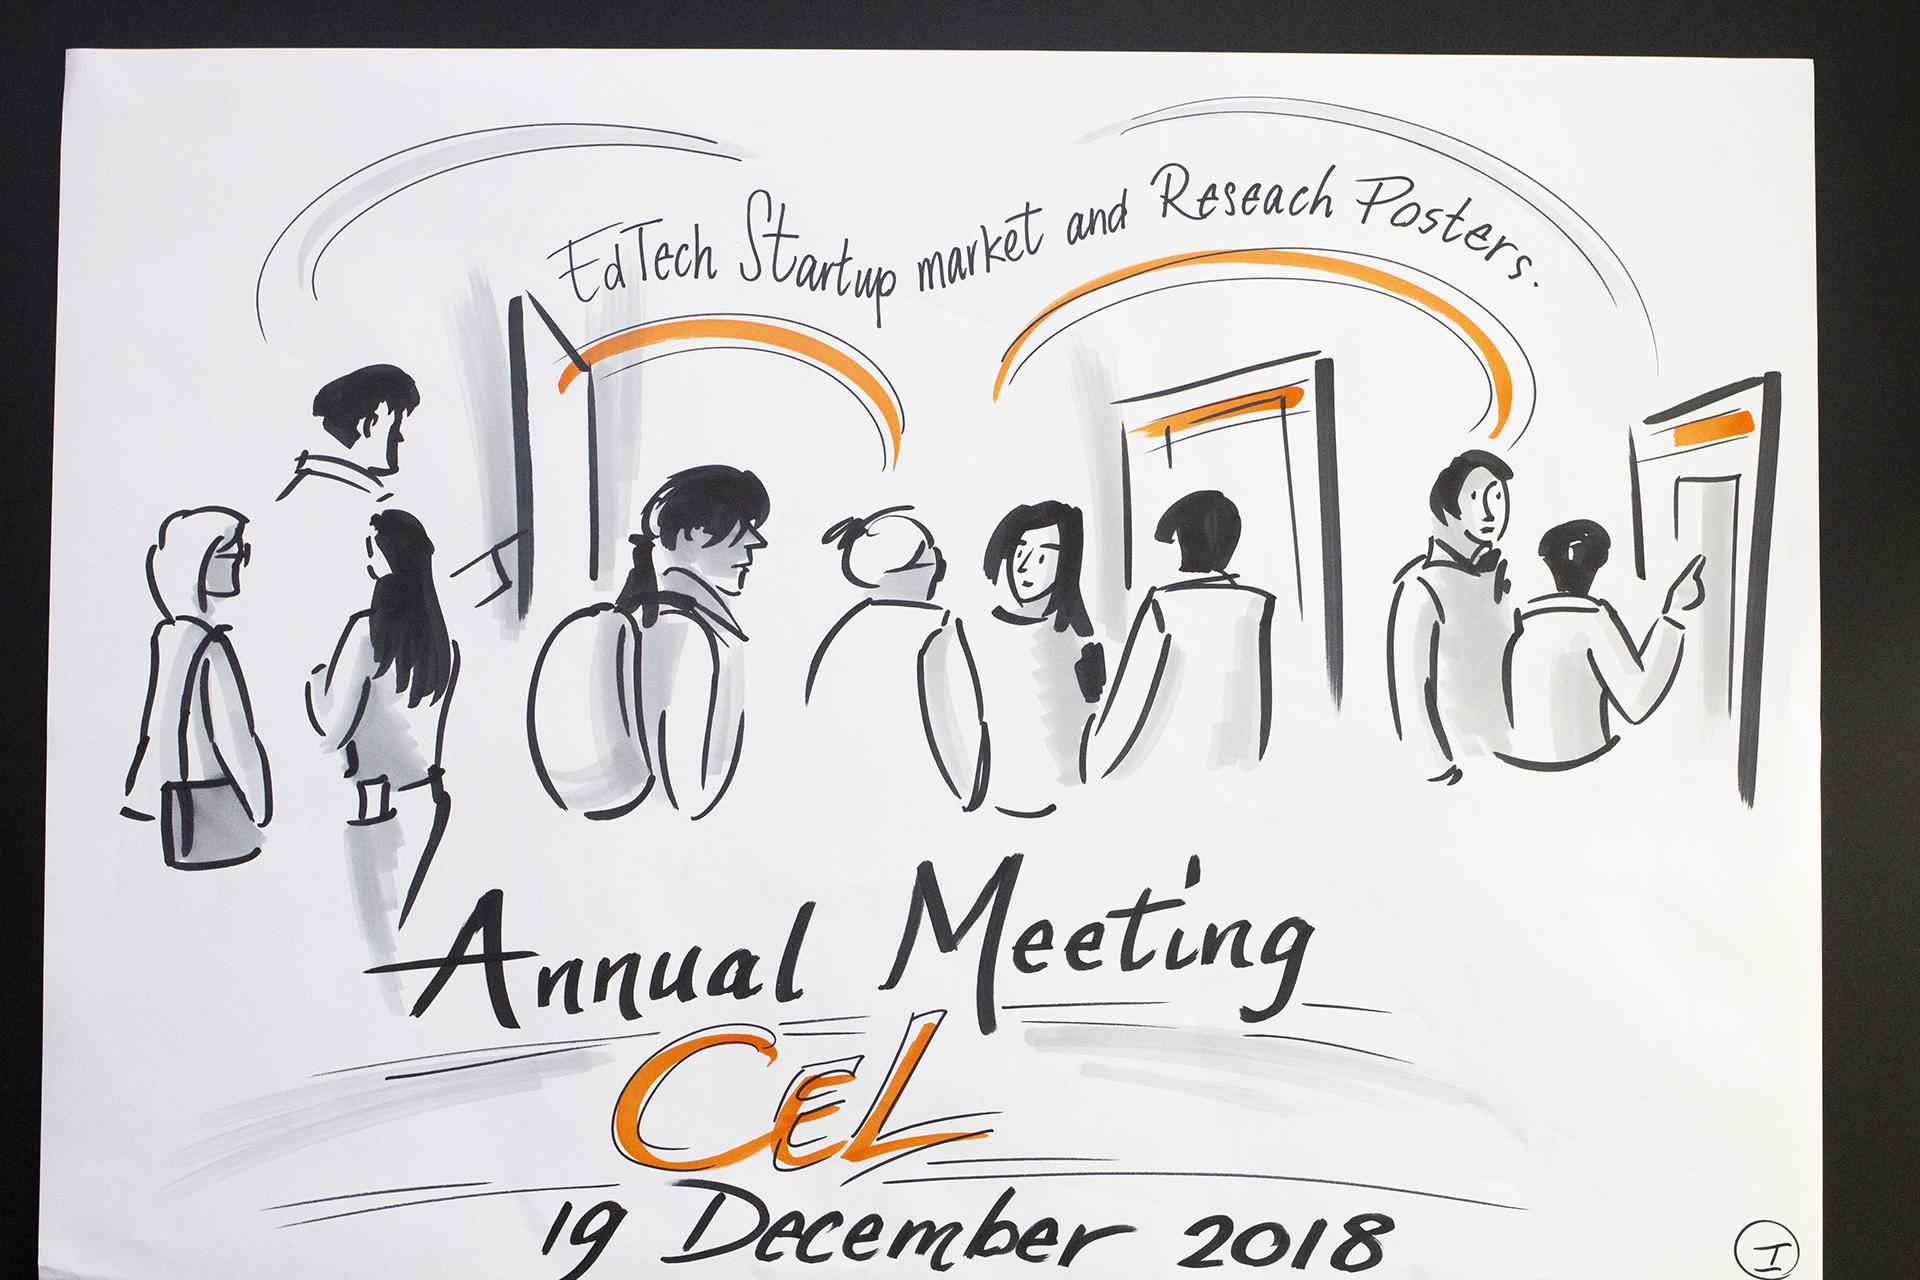 Annual Meeting Visual